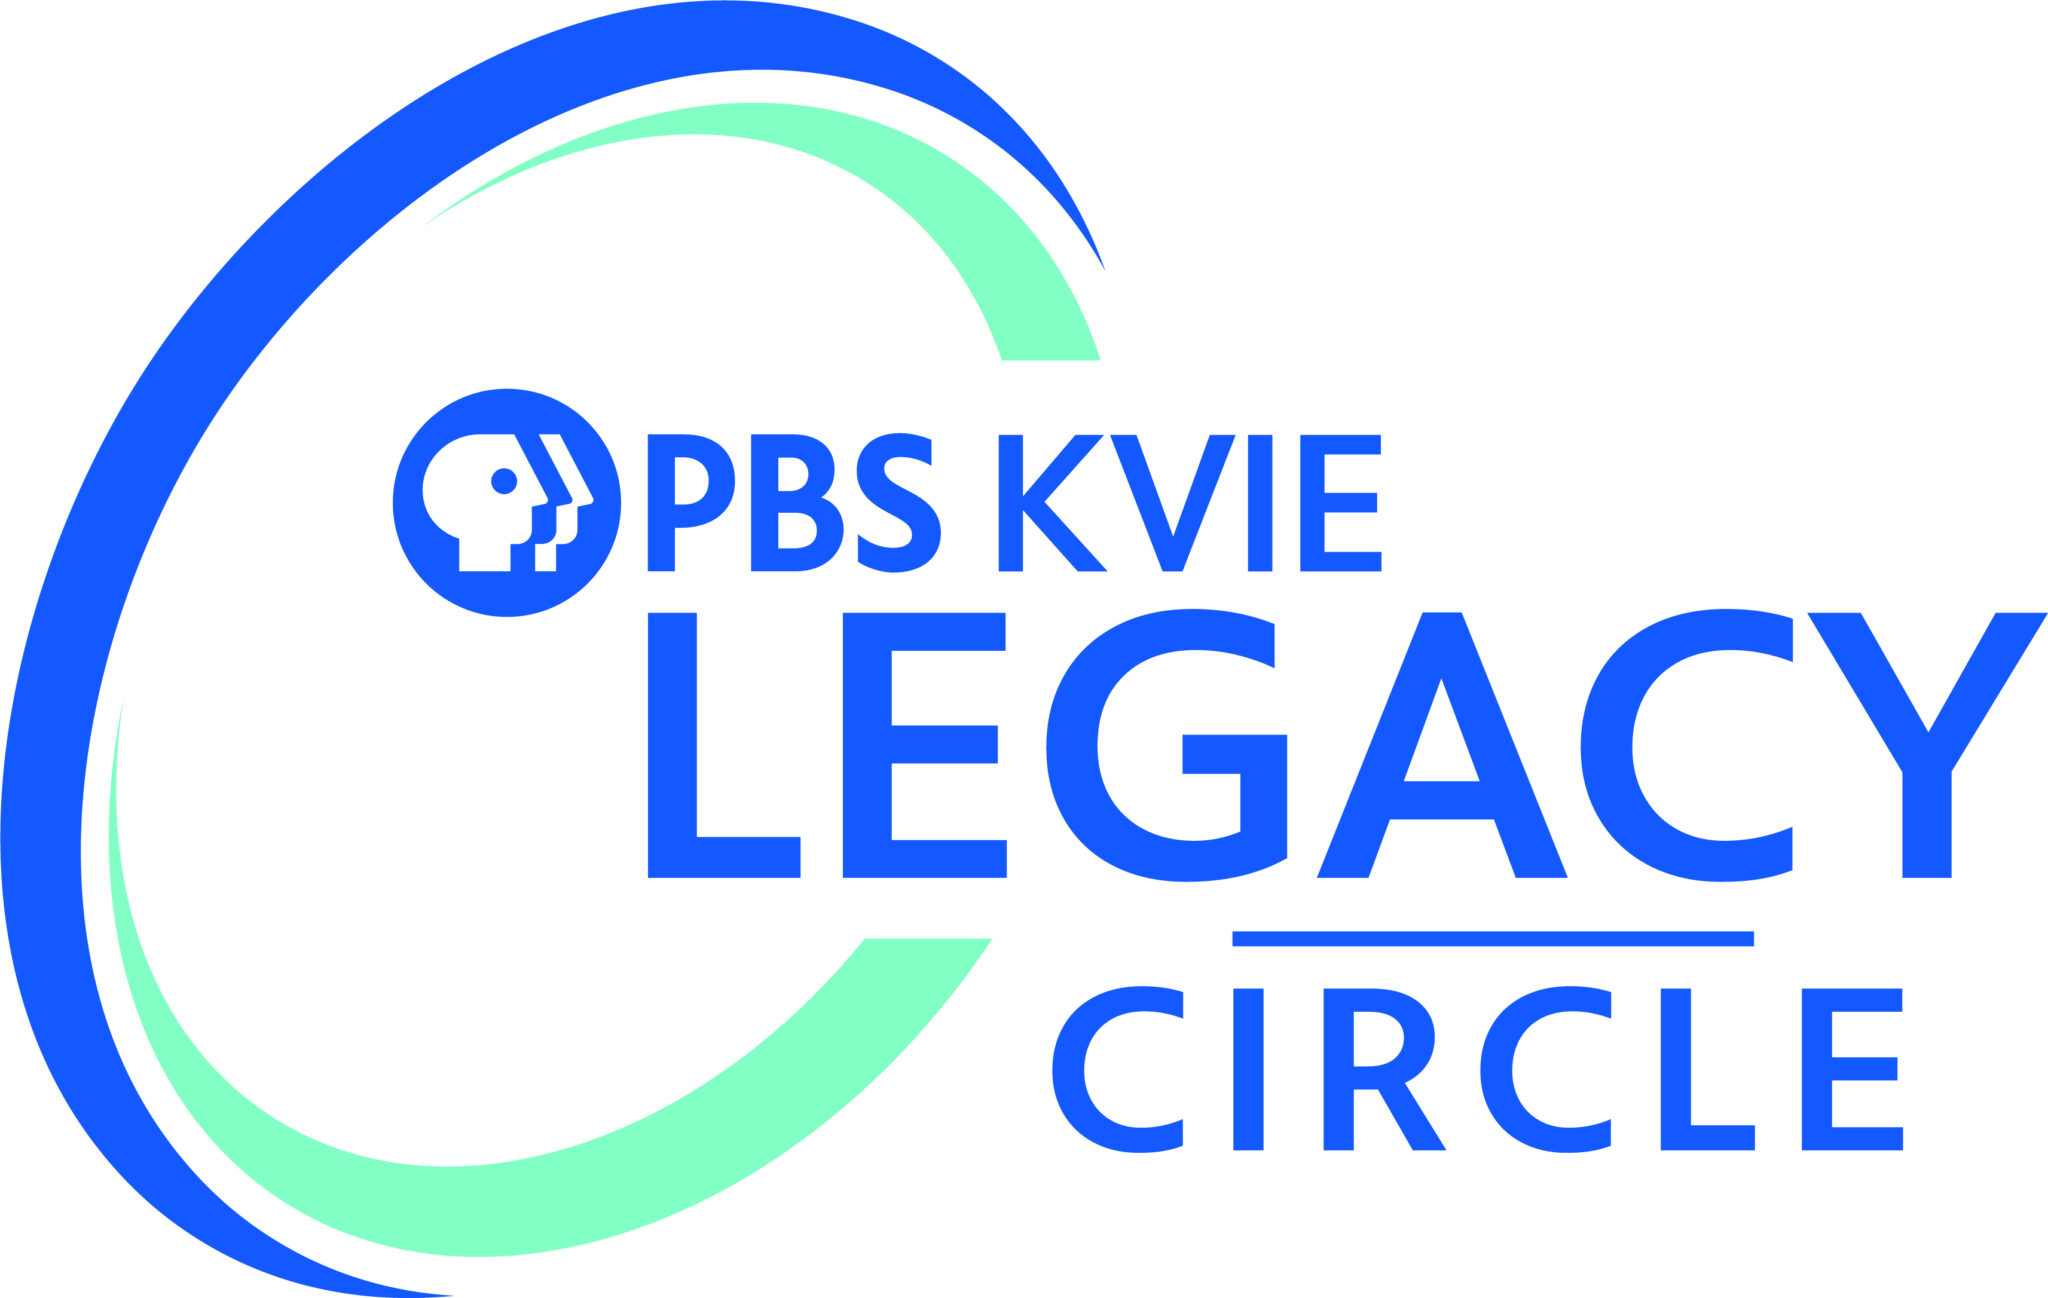 PBS KVIE Legacy Circle